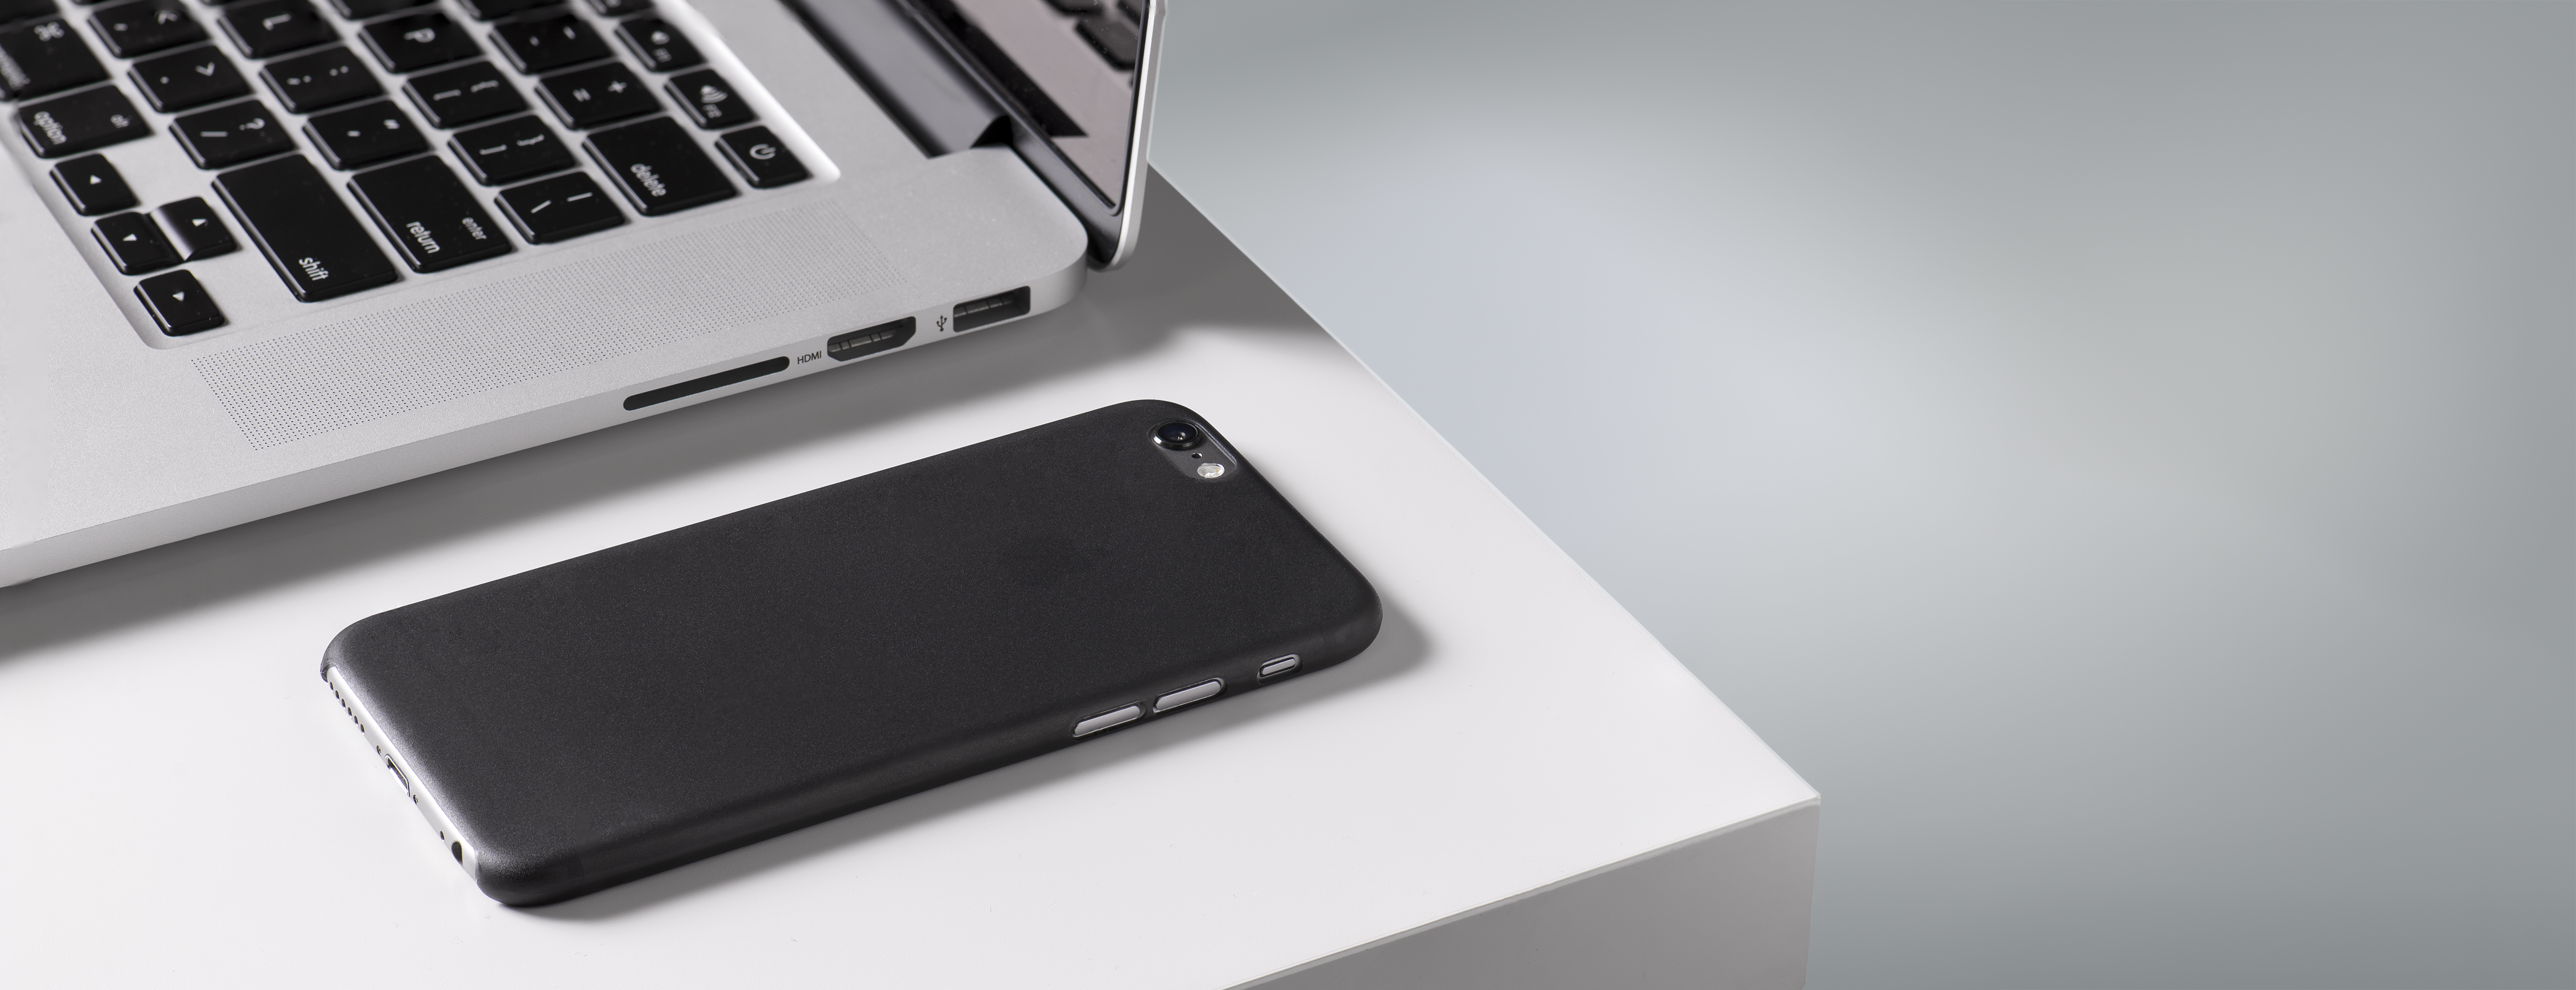 totallee Slim iPhone 6 6S cases